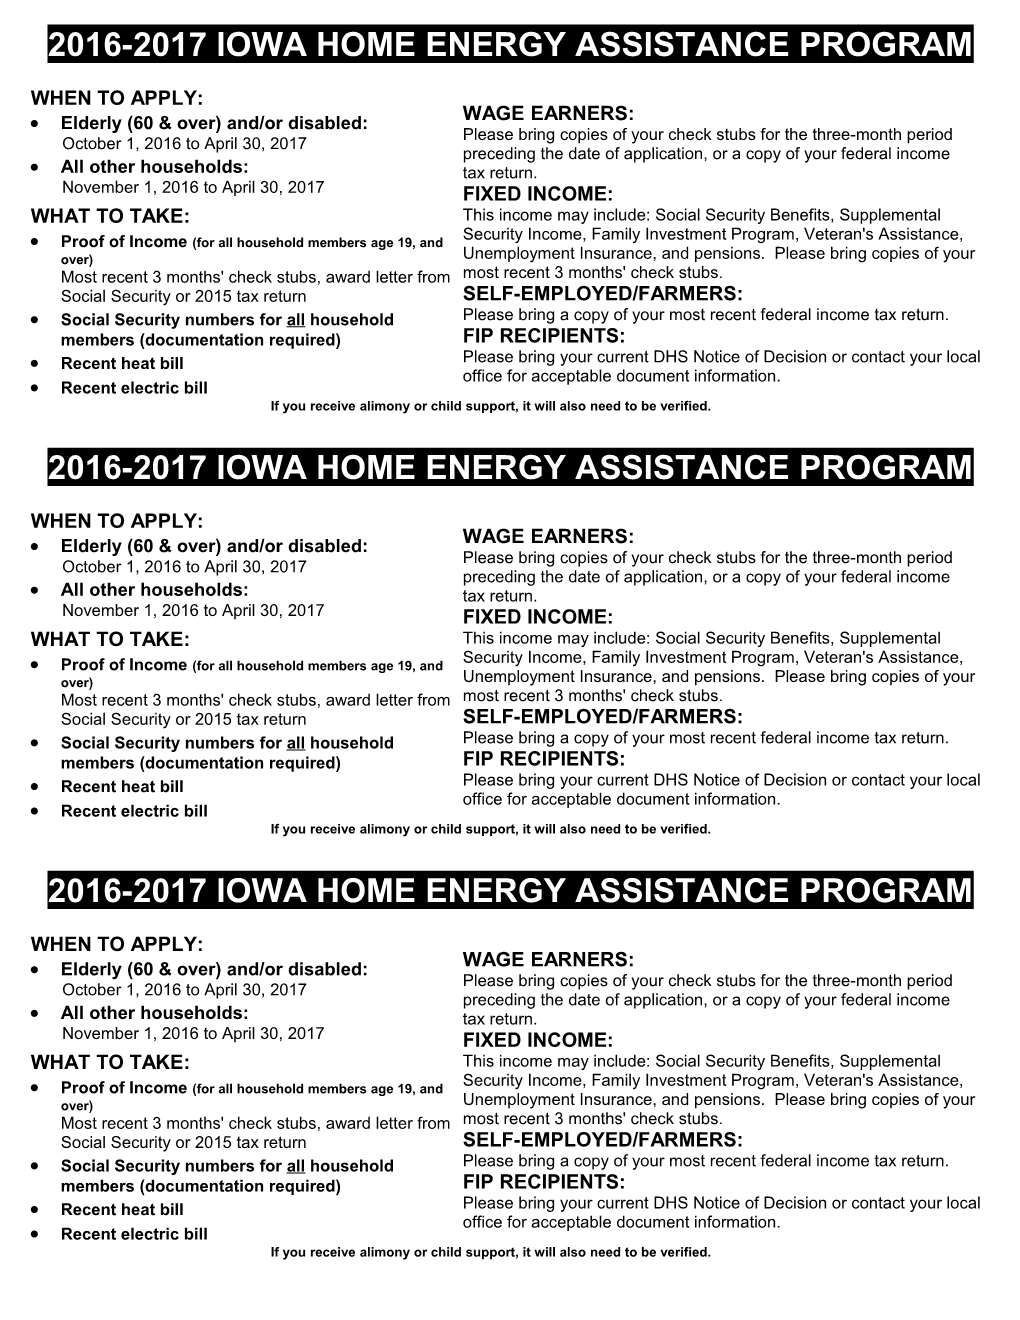 2001-2002 Iowa Home Energy Assistance Program